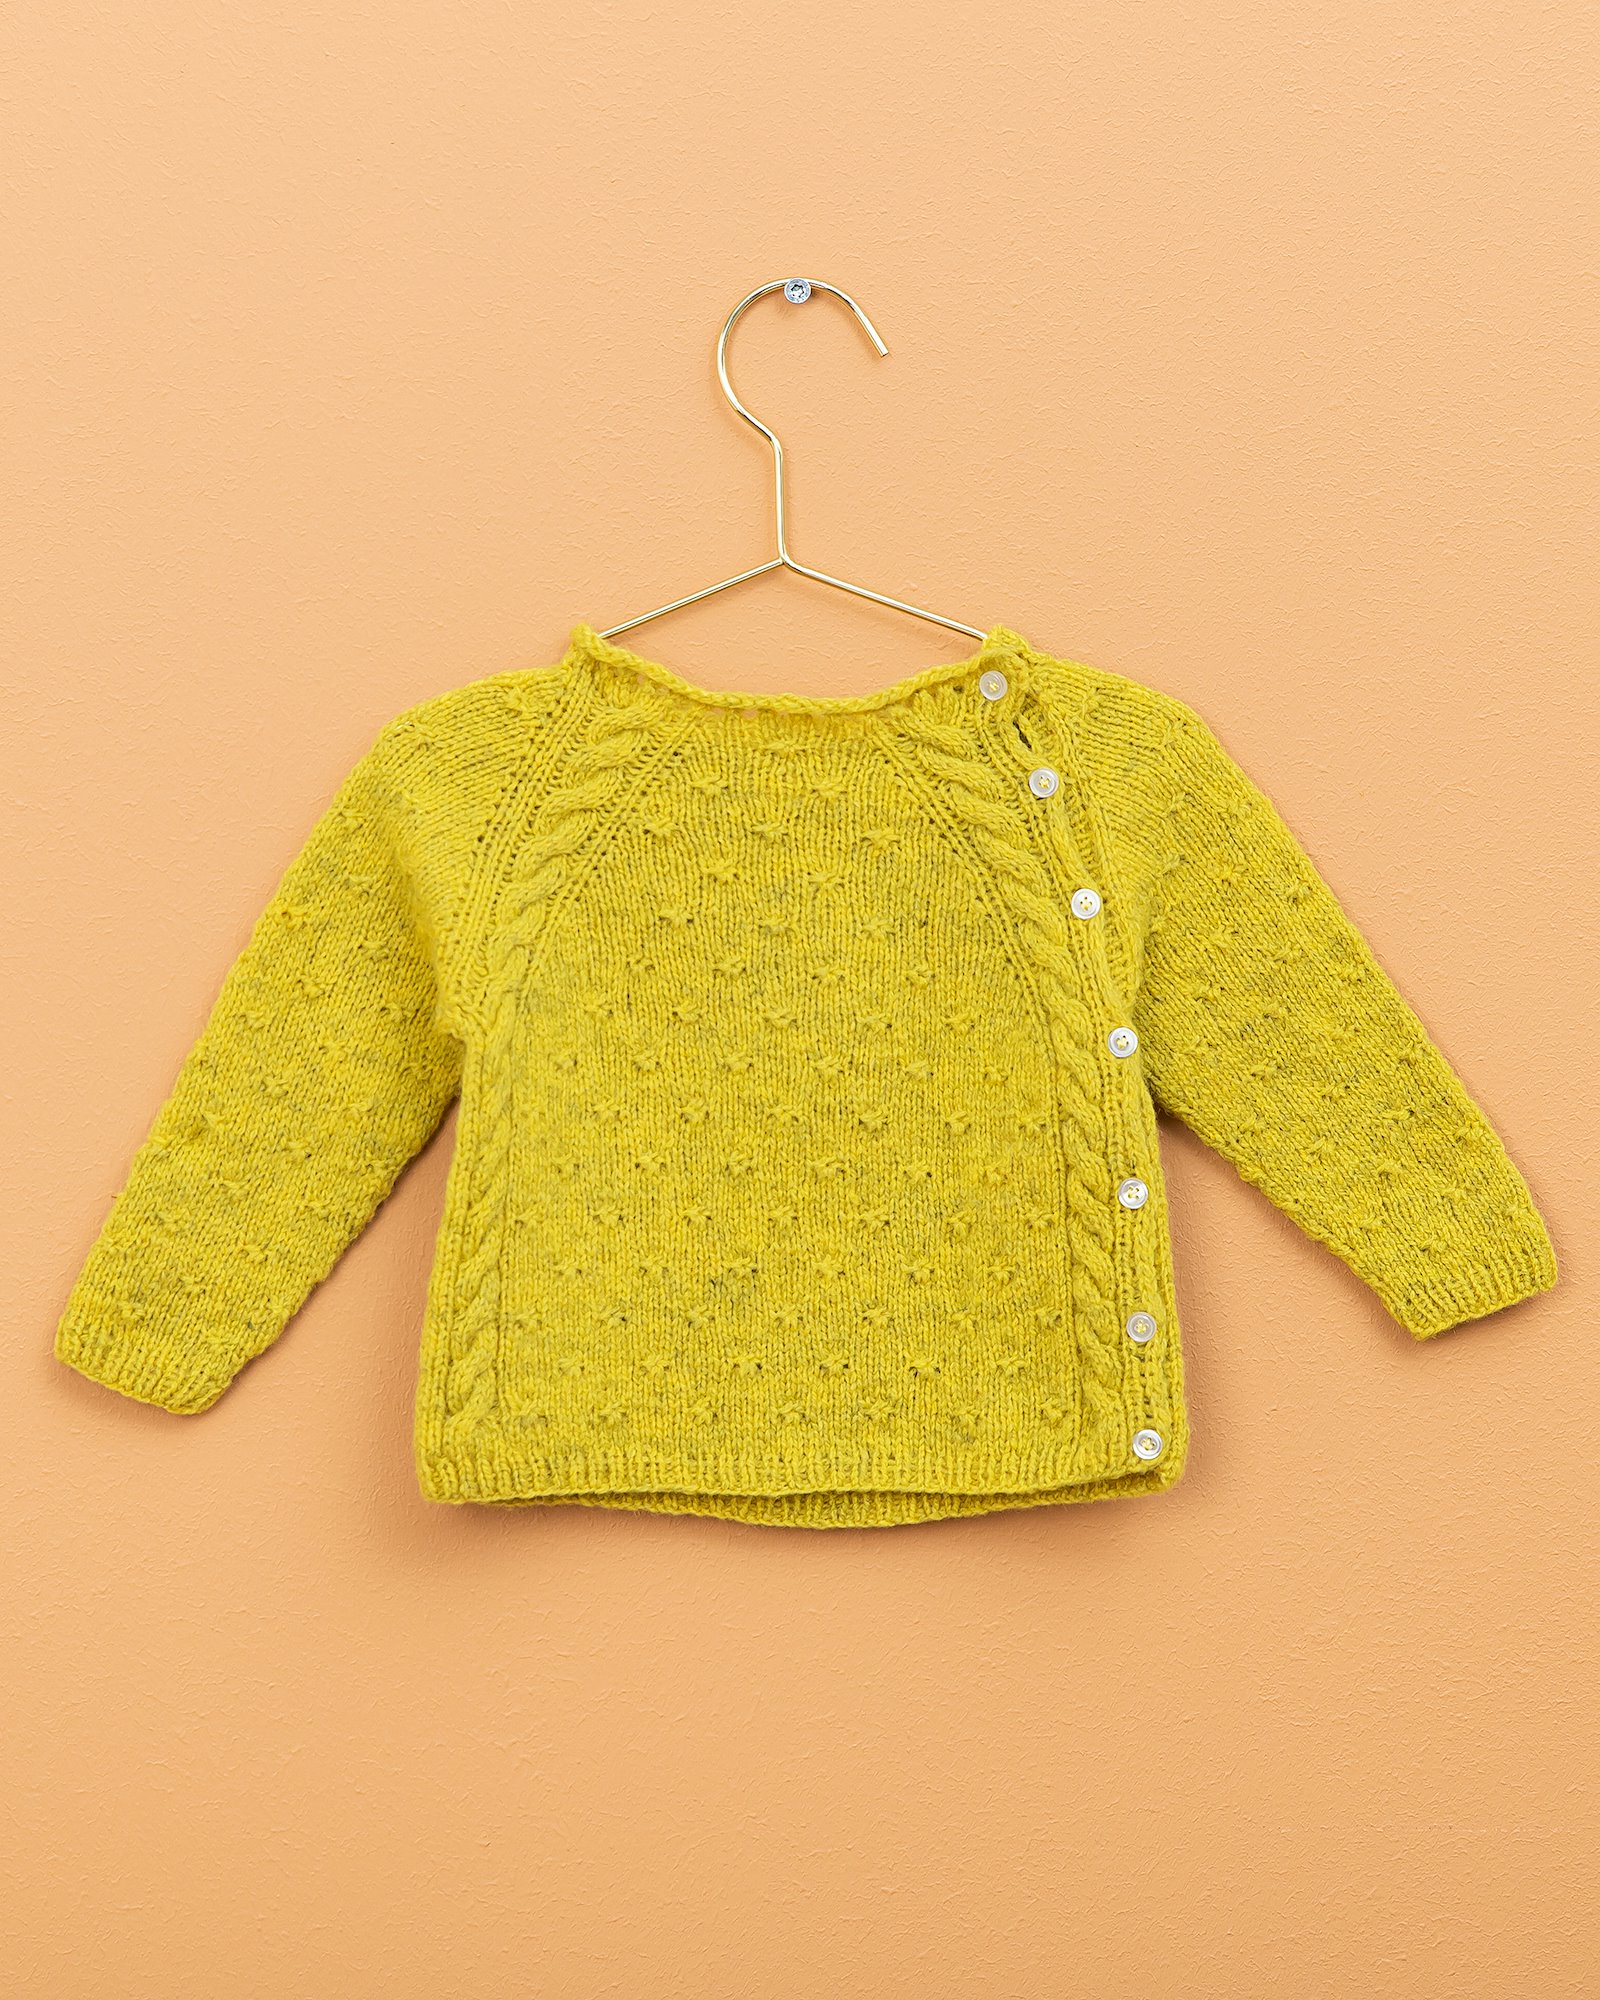 FRAYA Strickanleitung - Soft Cuddles Baby Sweater, Kind & Baby FRAYA6013.jpg